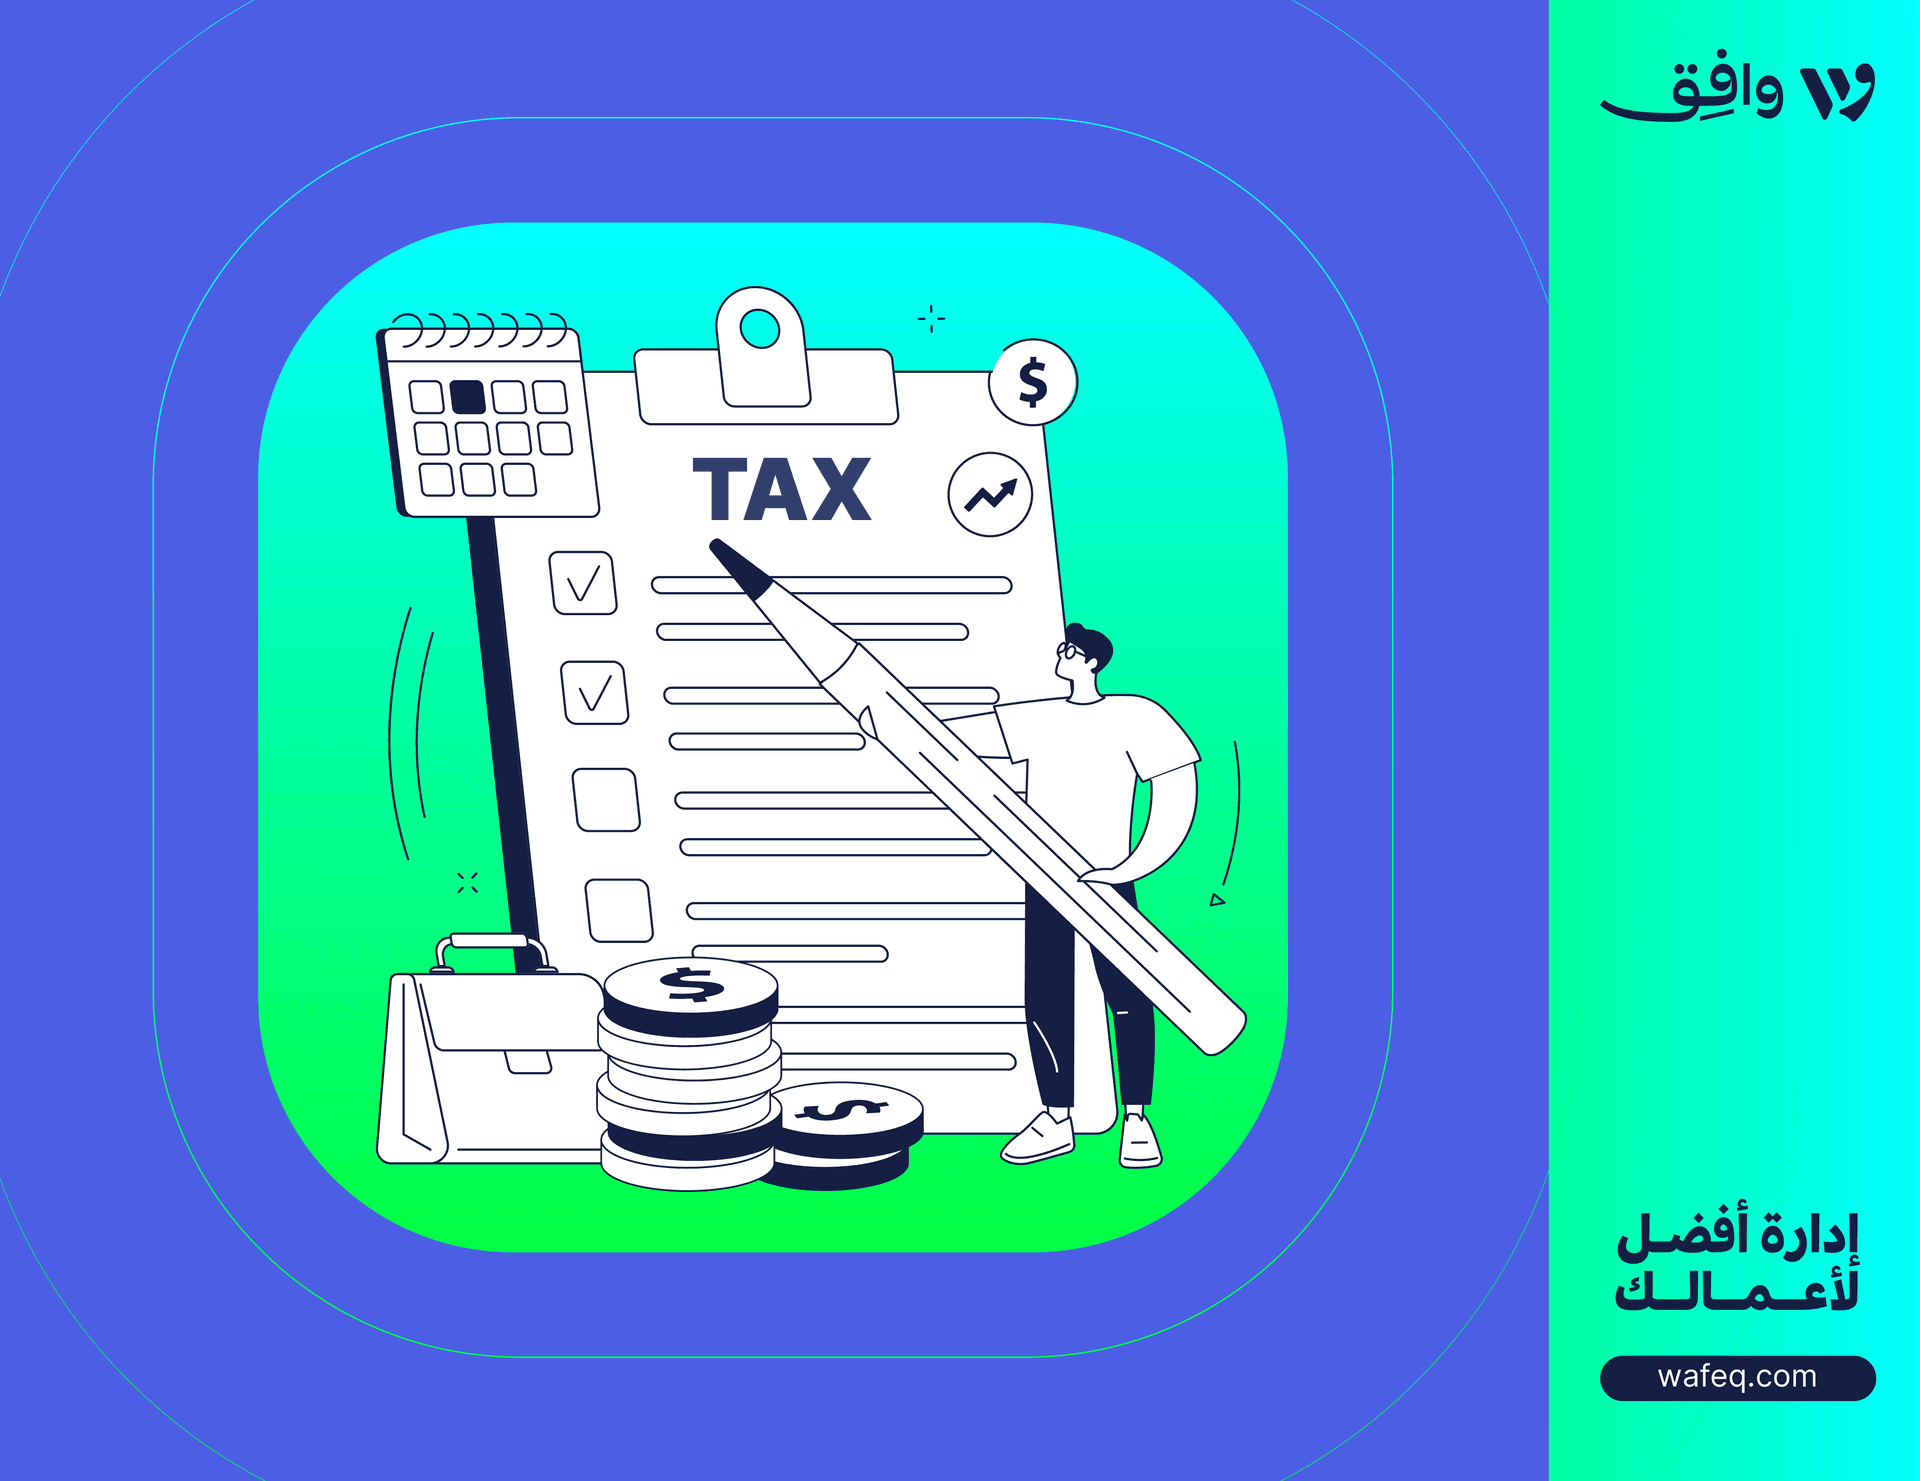 UAE's New Corporate Tax Law